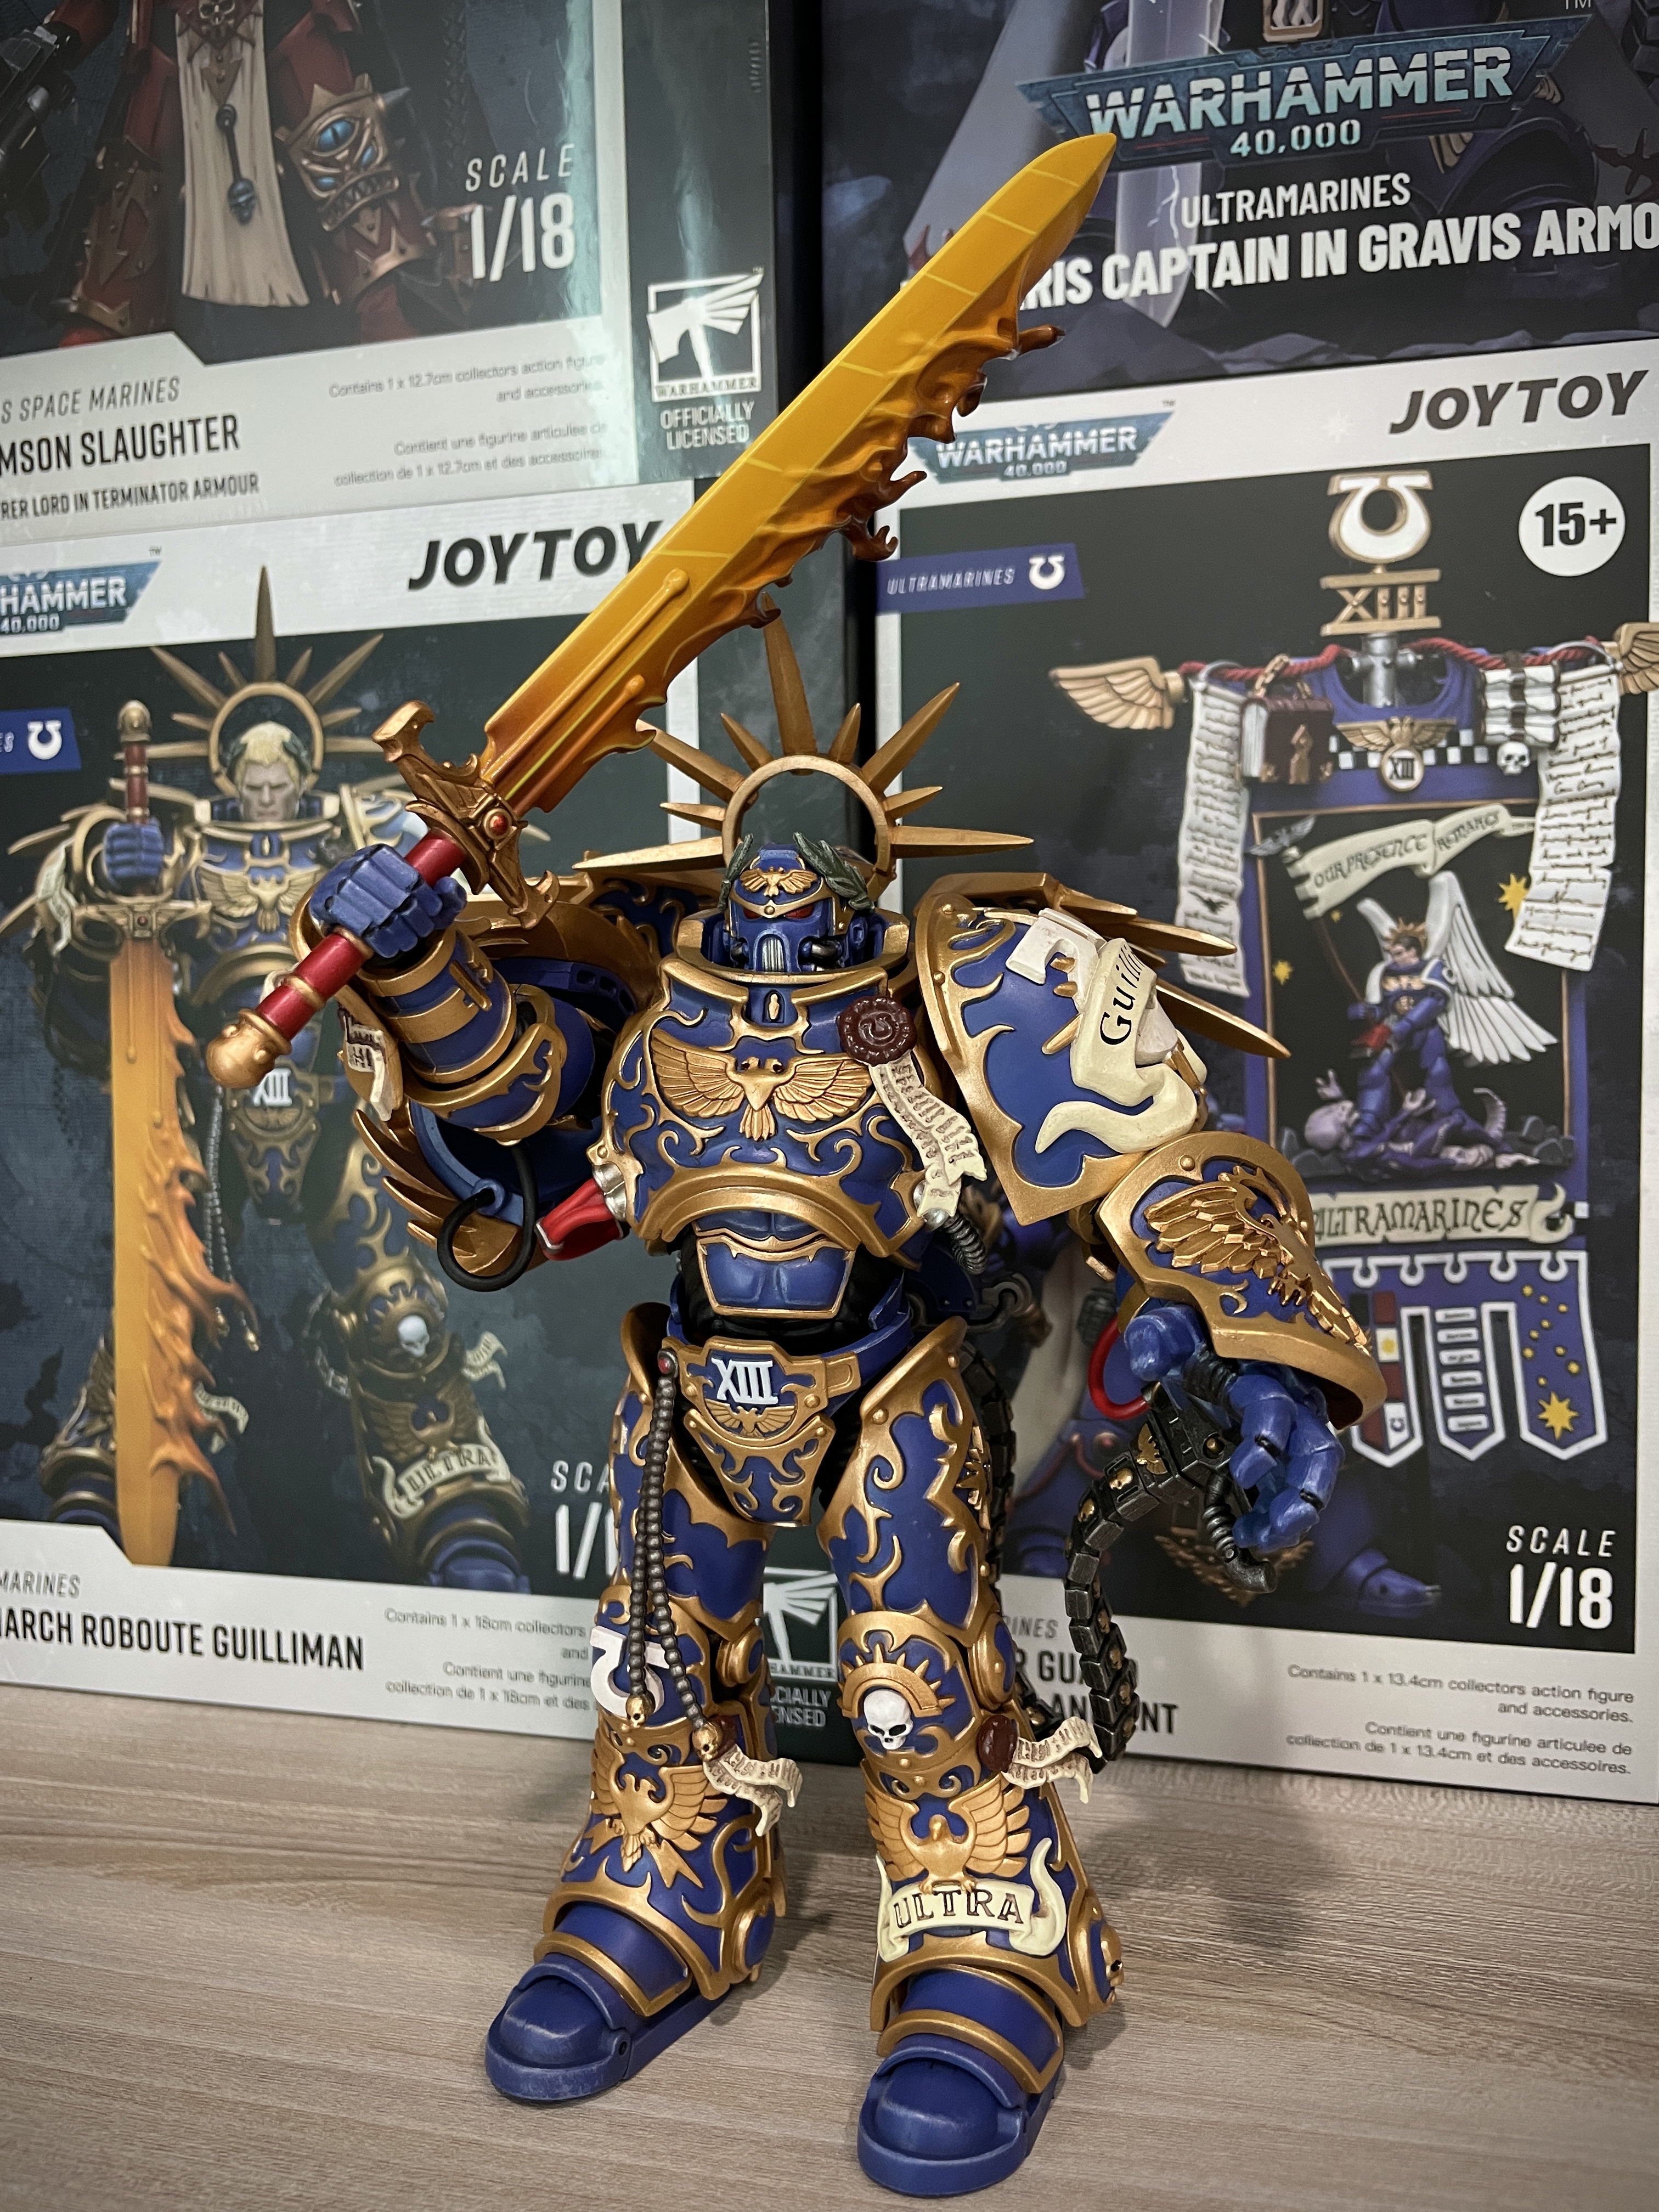 JOYTOY - Warhammer 40K Action Figure 1/18 Scale Ultramarines Primarch  Roboute Guilliman